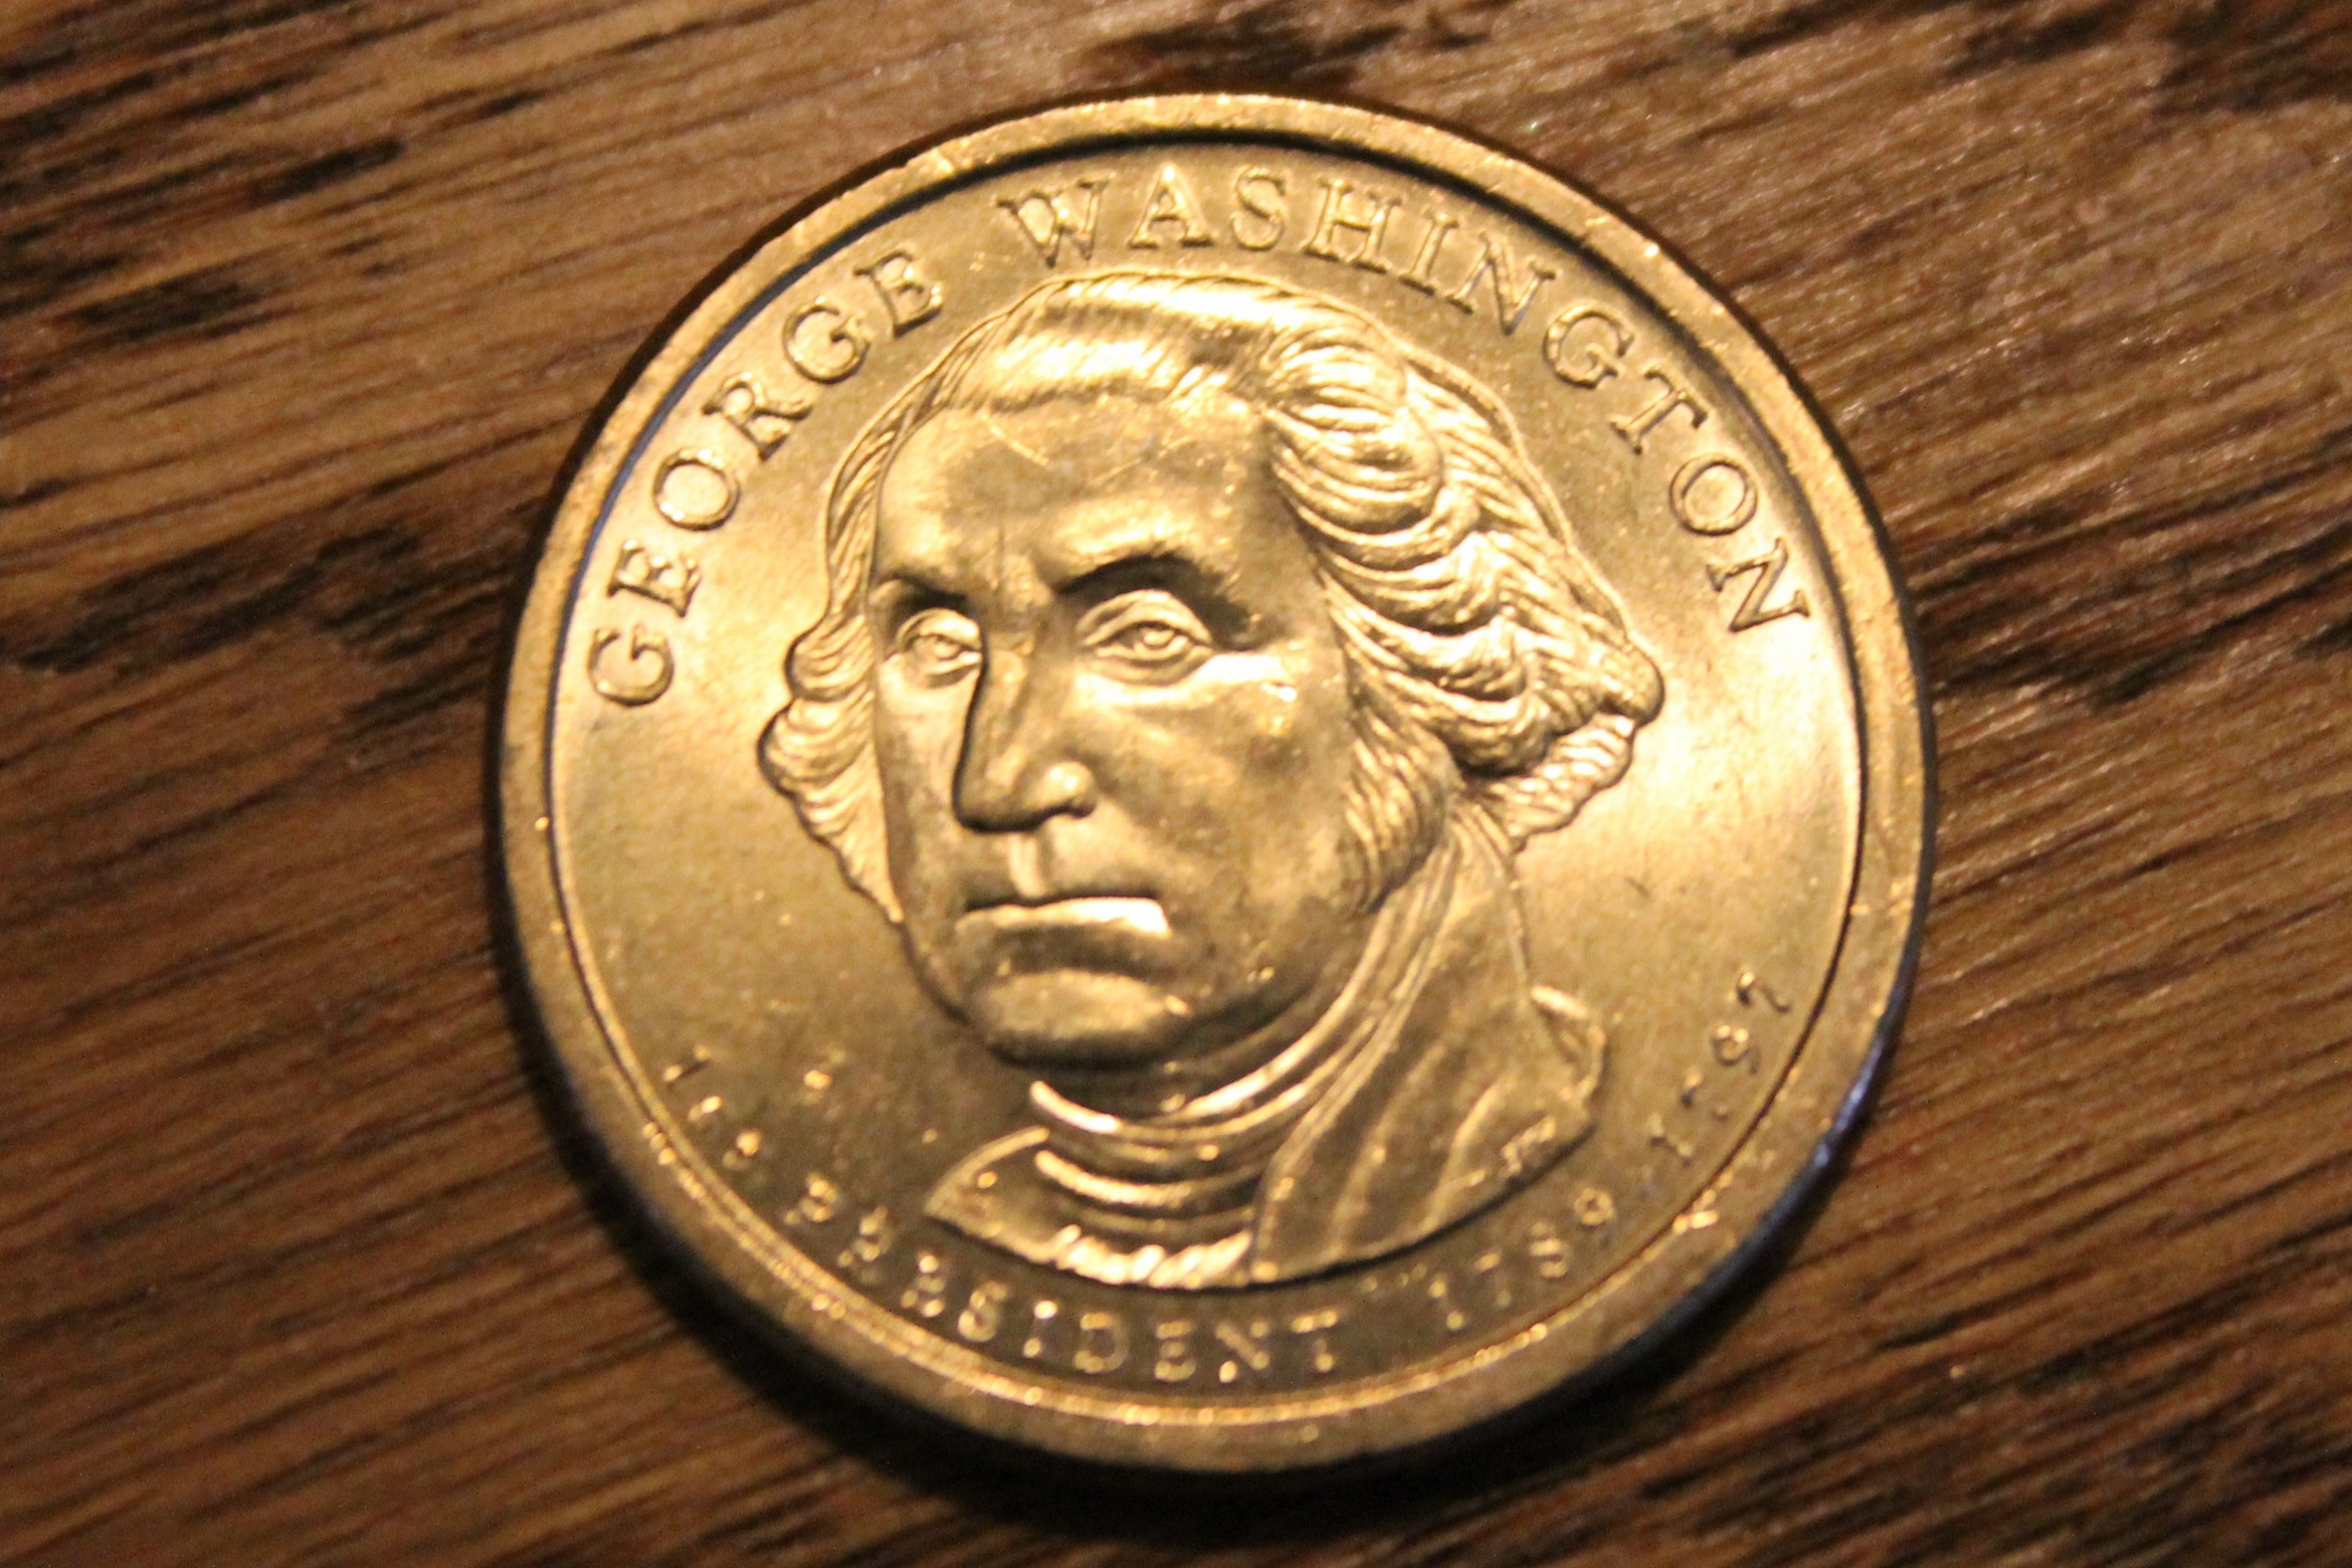 2007-P Presidential Dollar George Washington Coin - Circulated - for